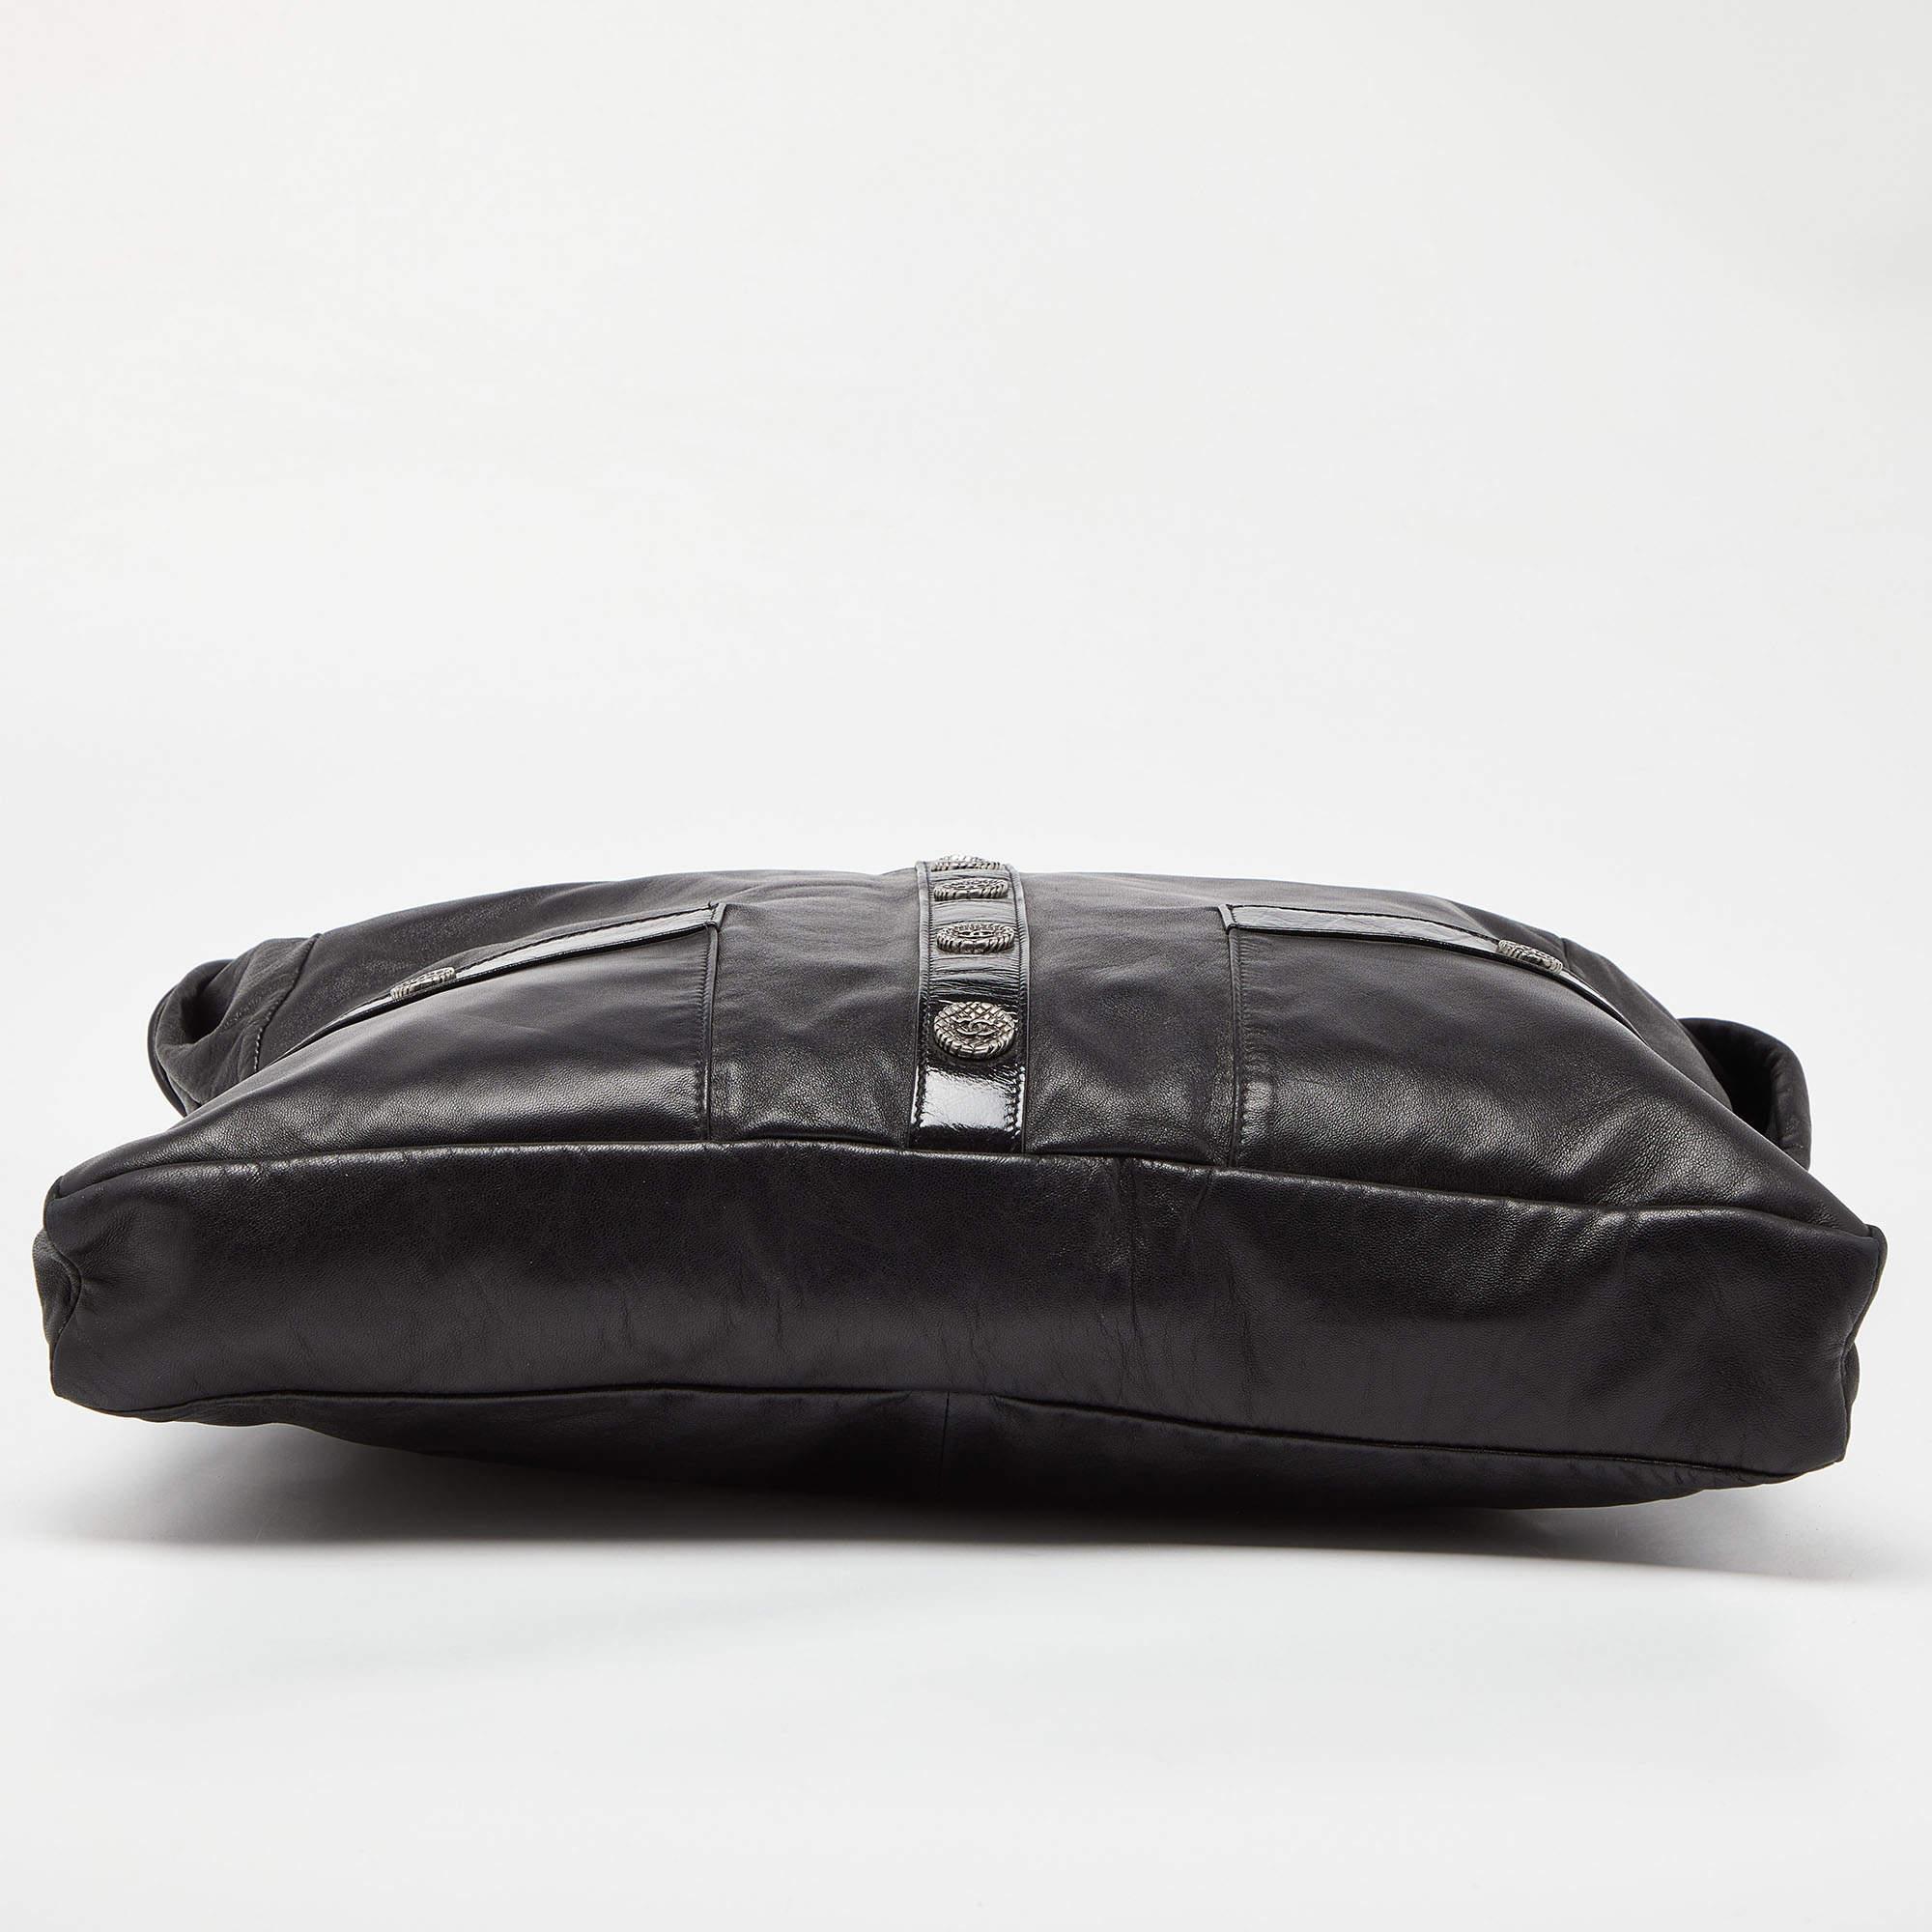 Chanel Black Leather Large Girl Chanel Bag For Sale 7